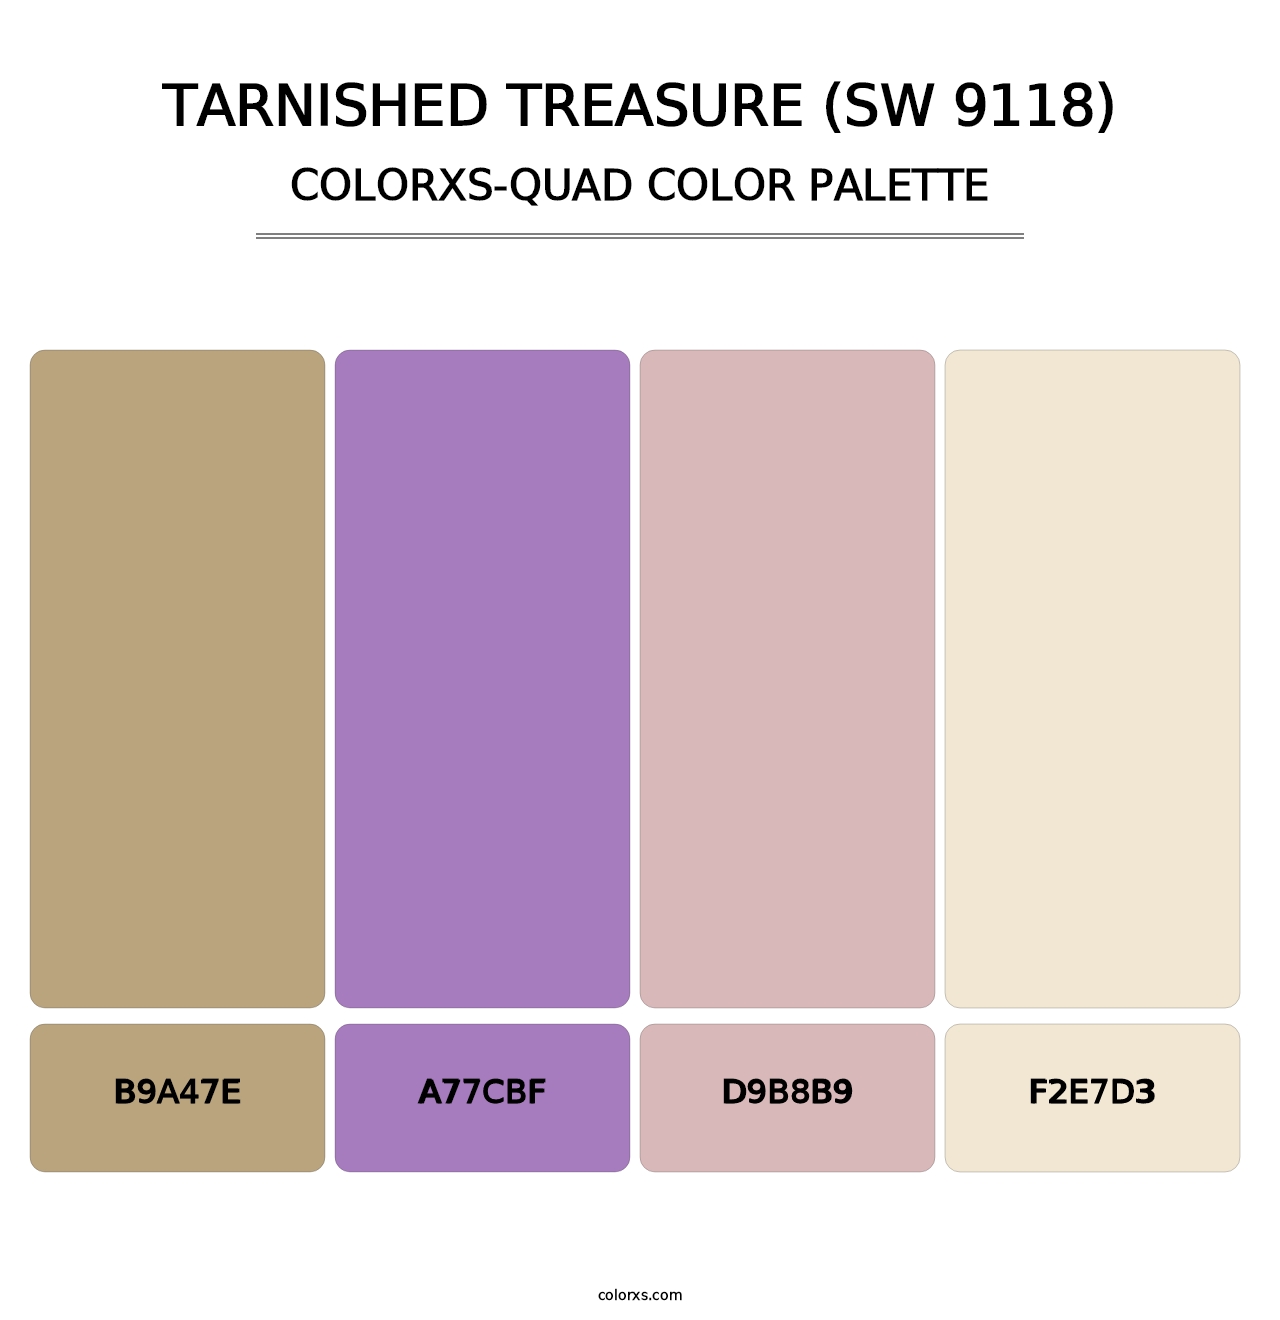 Tarnished Treasure (SW 9118) - Colorxs Quad Palette